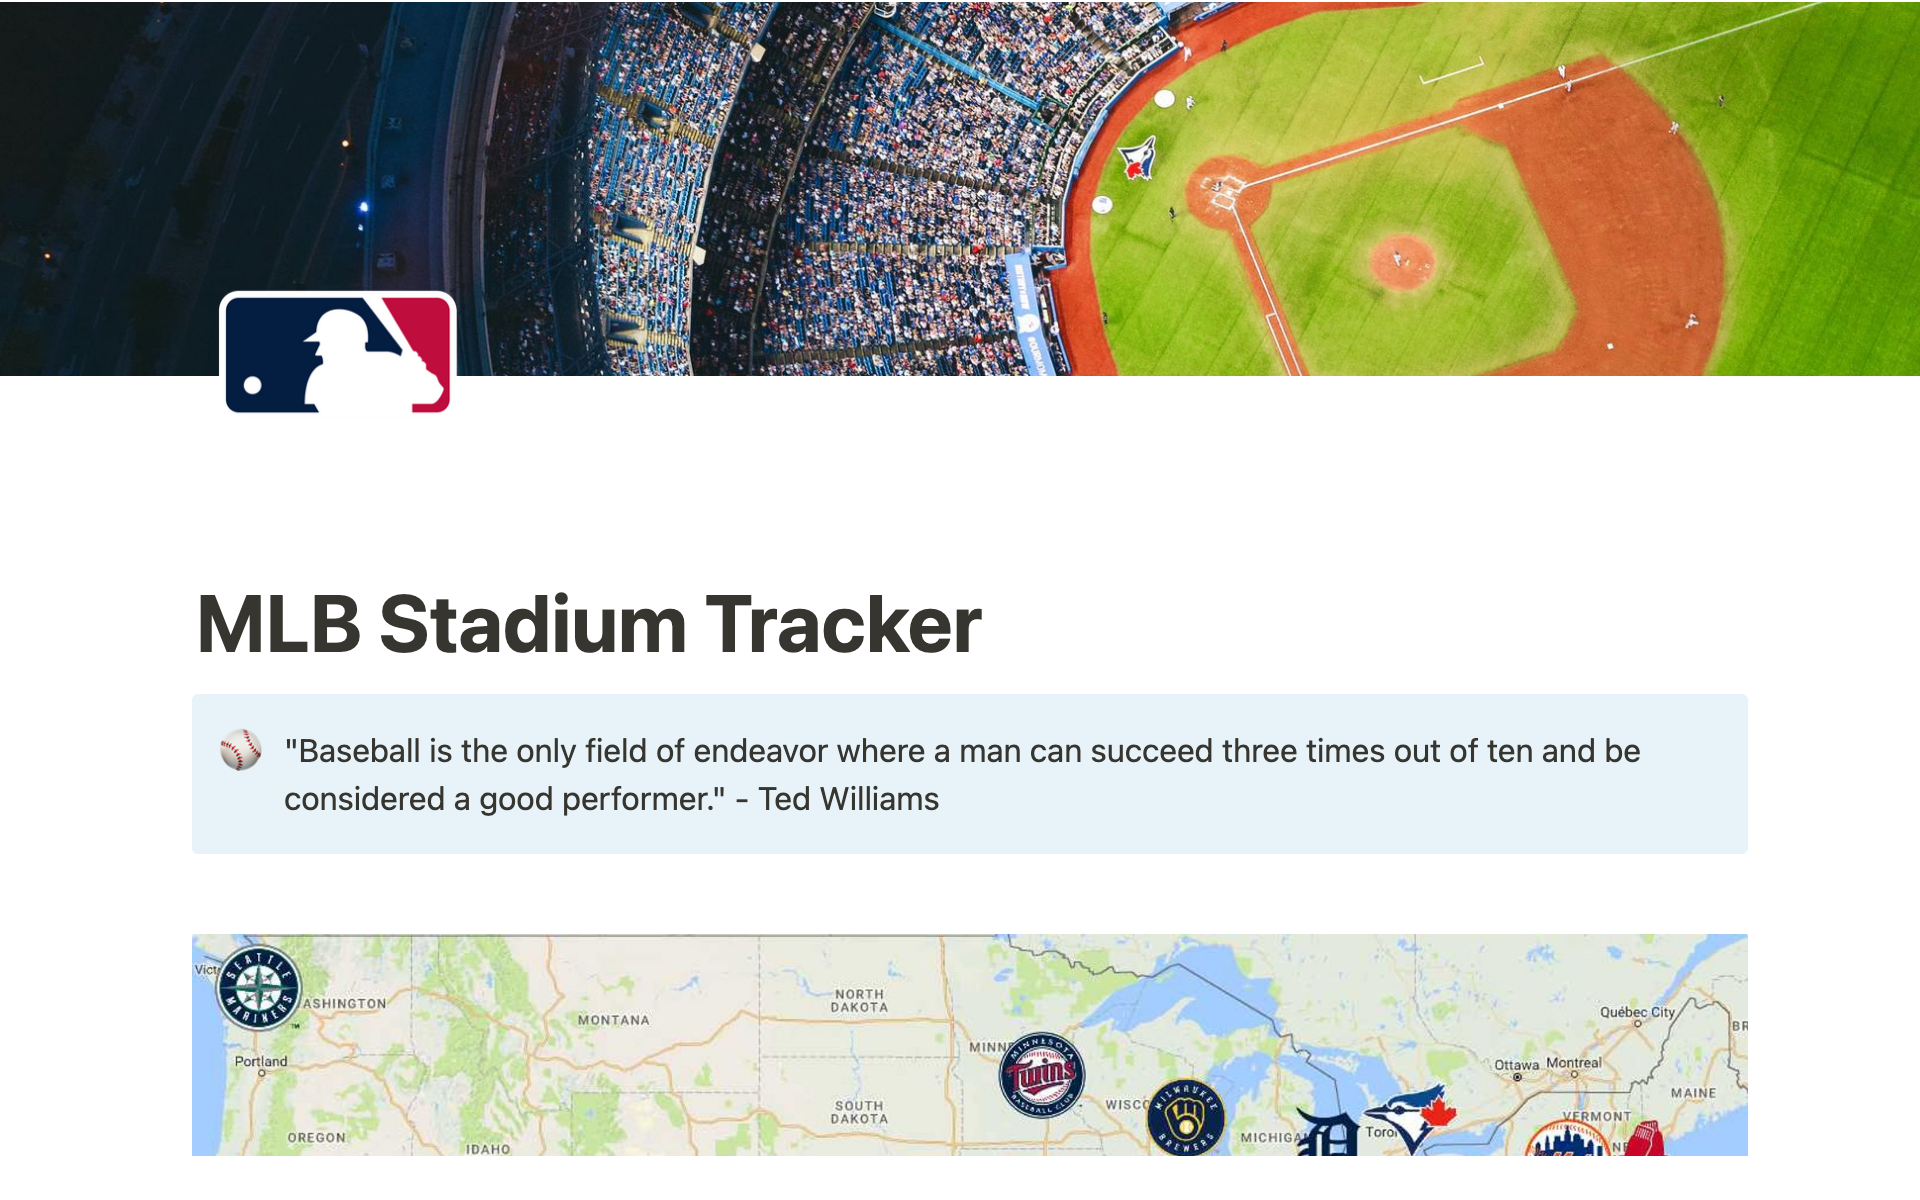 Aperçu du modèle de MLB Stadium Tracker